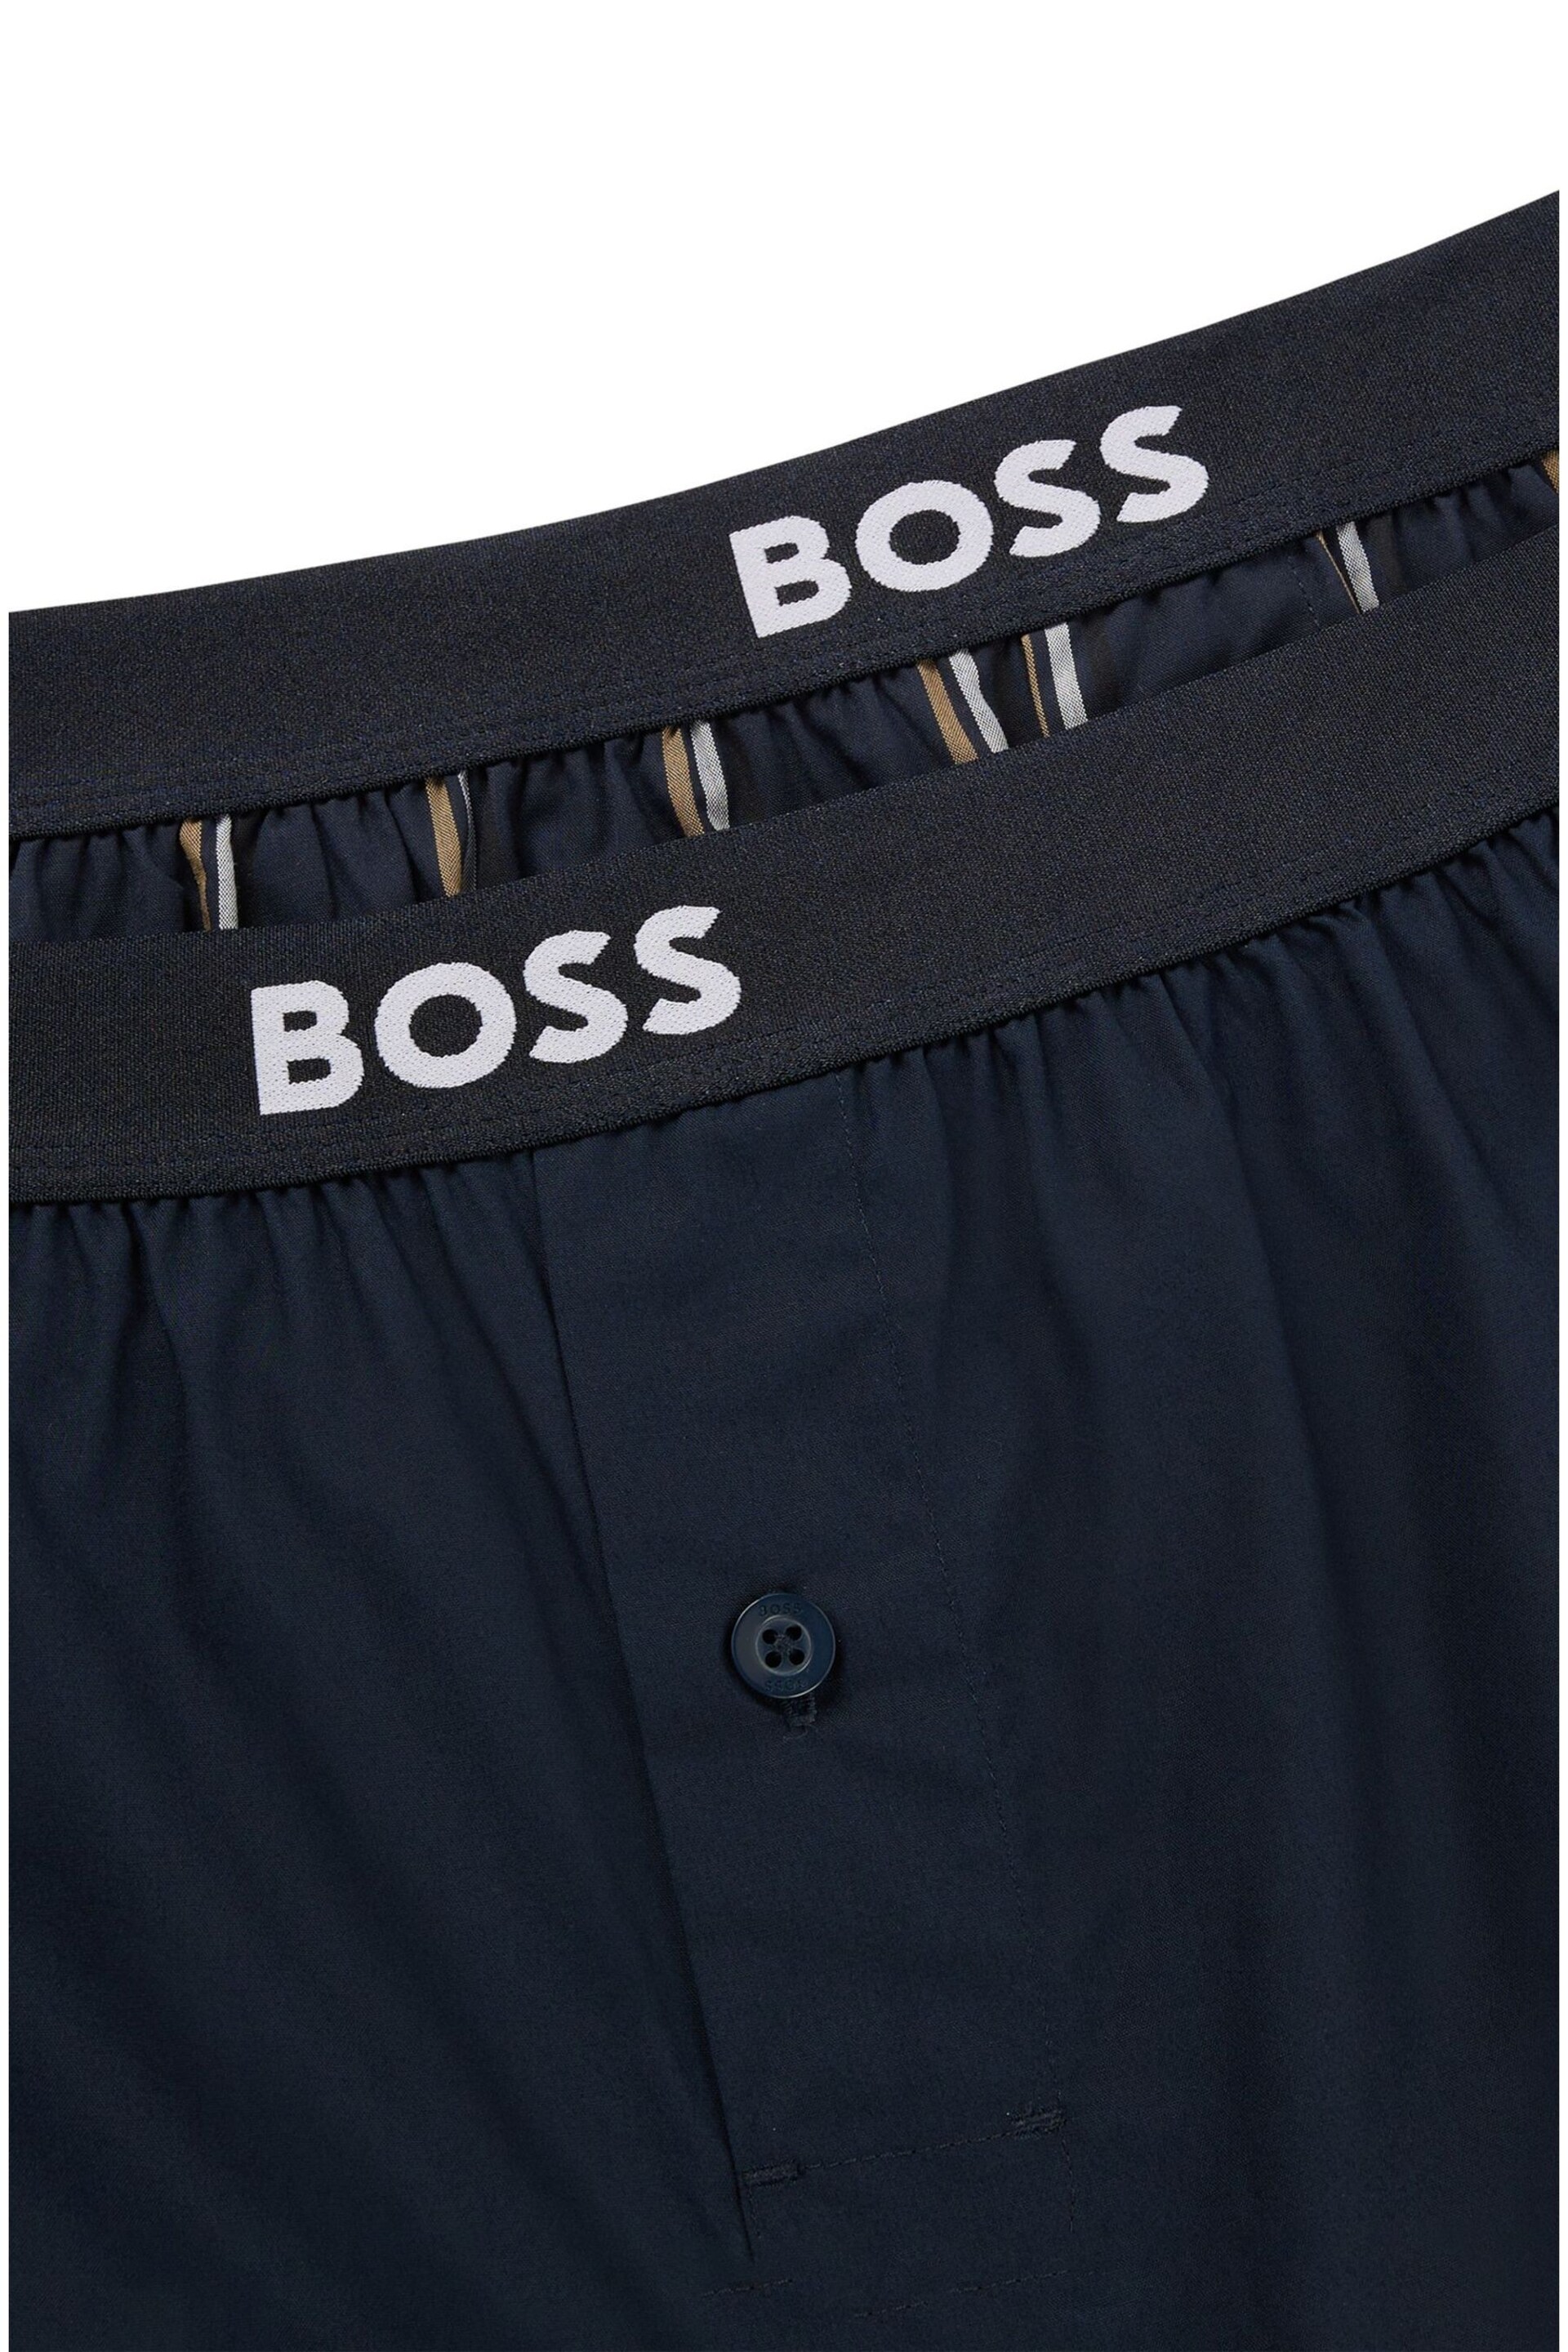 BOSS Blue Cotton Pyjama Shorts 2 Pack With Logo Waistbands - Image 2 of 6